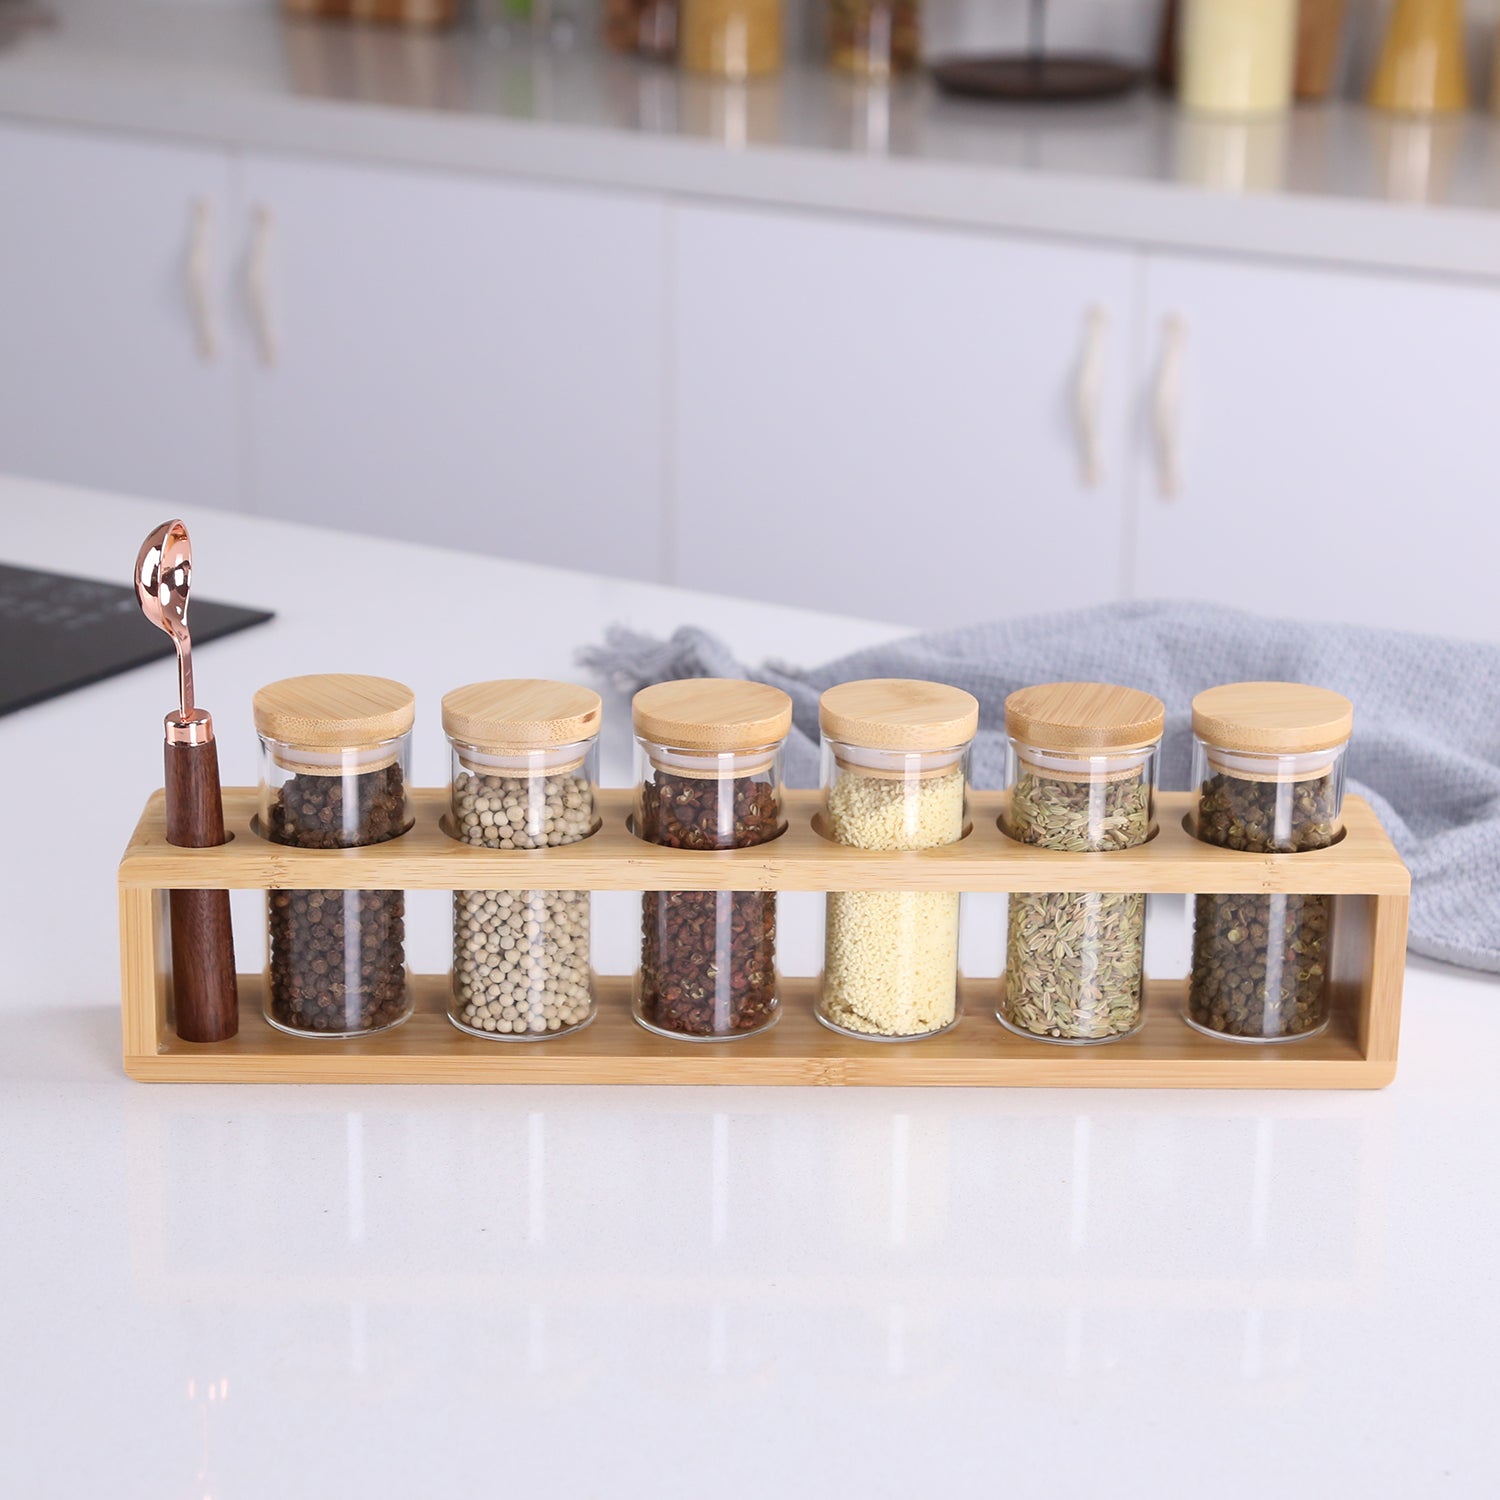 Mini Bamboo Wooden Spoon for Spice / Seasoning Jars , Glass Jars, Home  Organization 